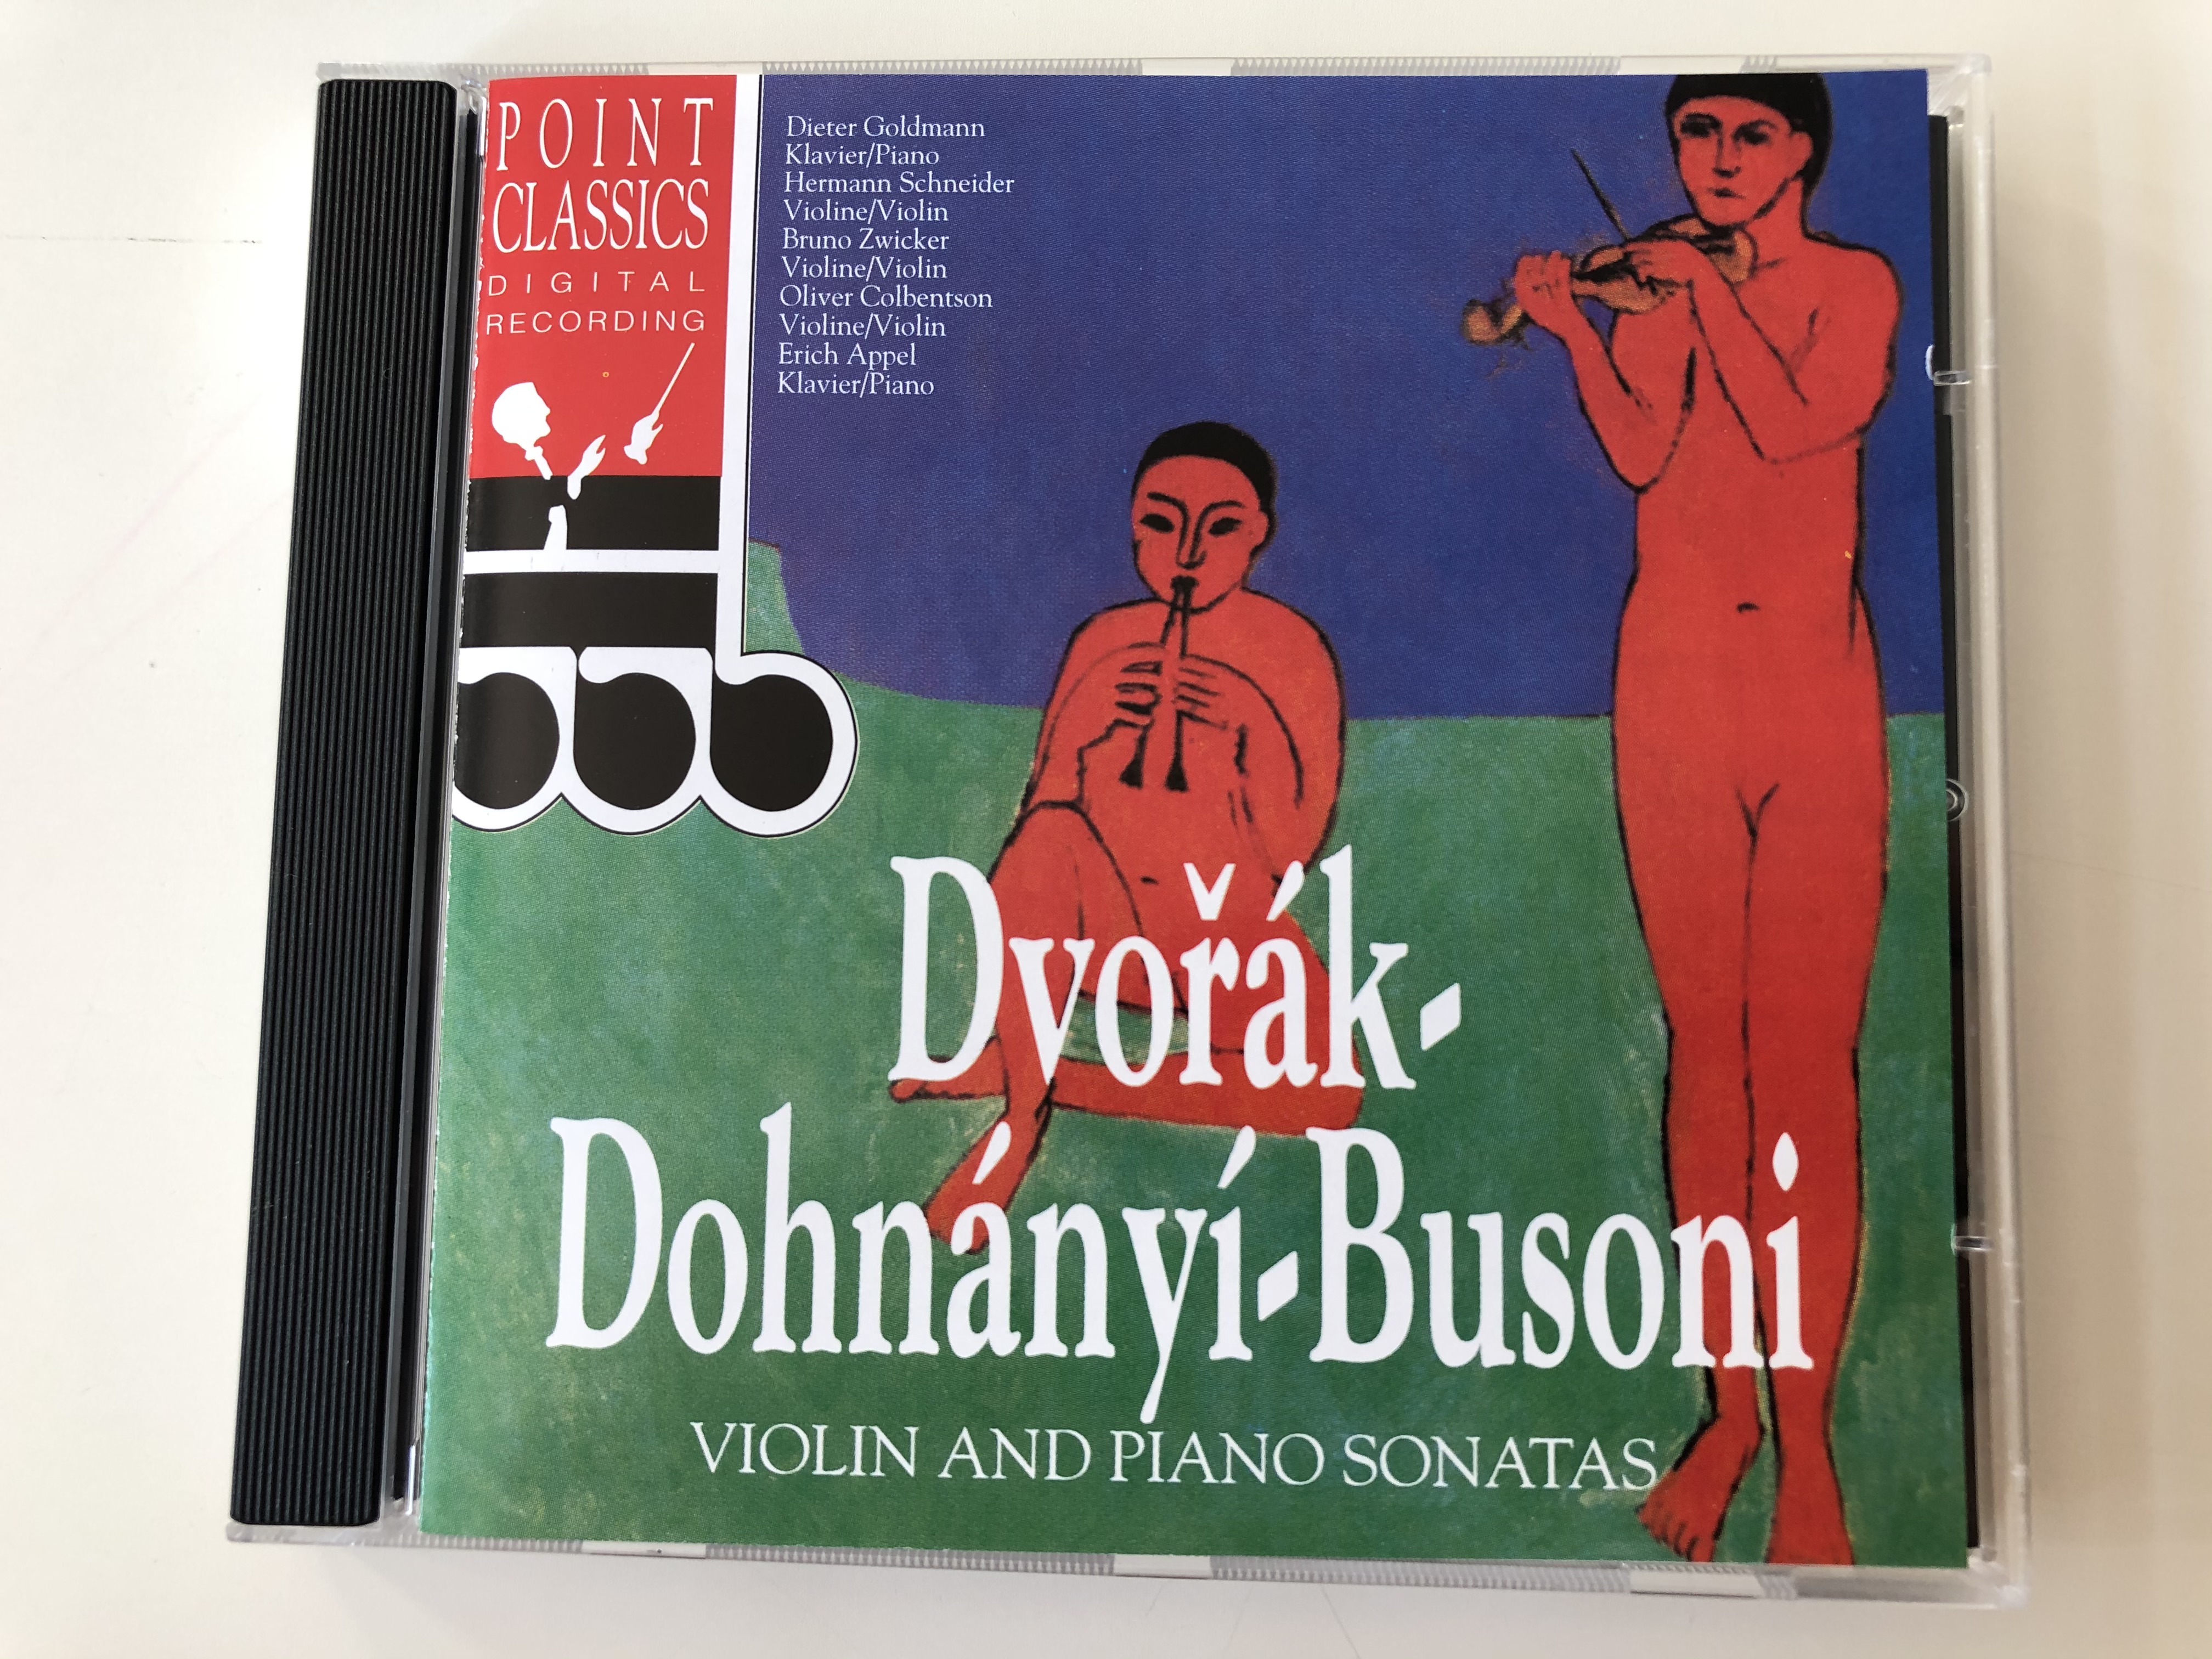 dvorak-dohnanyi-busoni-violin-and-piano-sonatas-dieter-goldmann-piano-hermann-schneider-violin-bruno-zwicker-violin-oliver-colbentson-violin-erich-appel-piano-point-classics-1-.jpg